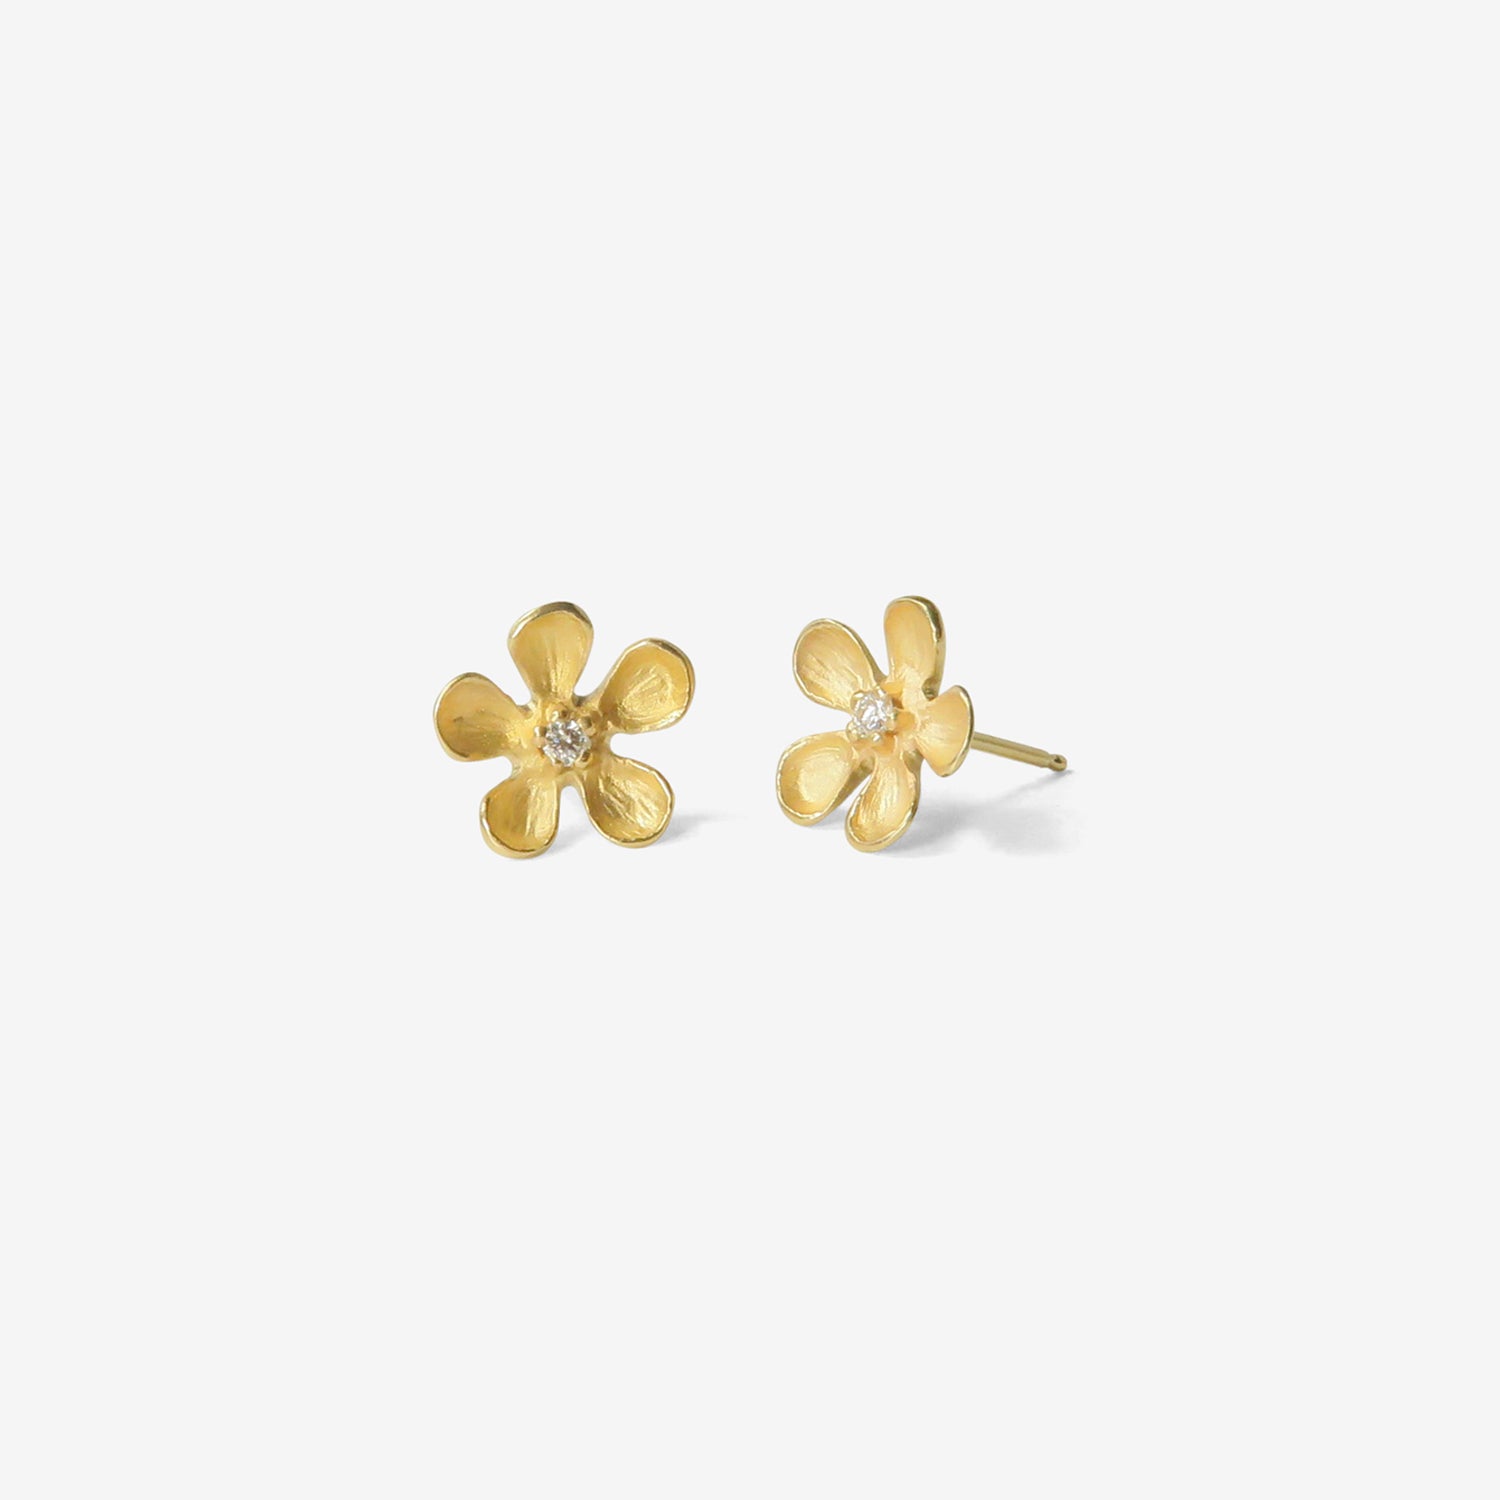 Discover 131+ big gold flower stud earrings